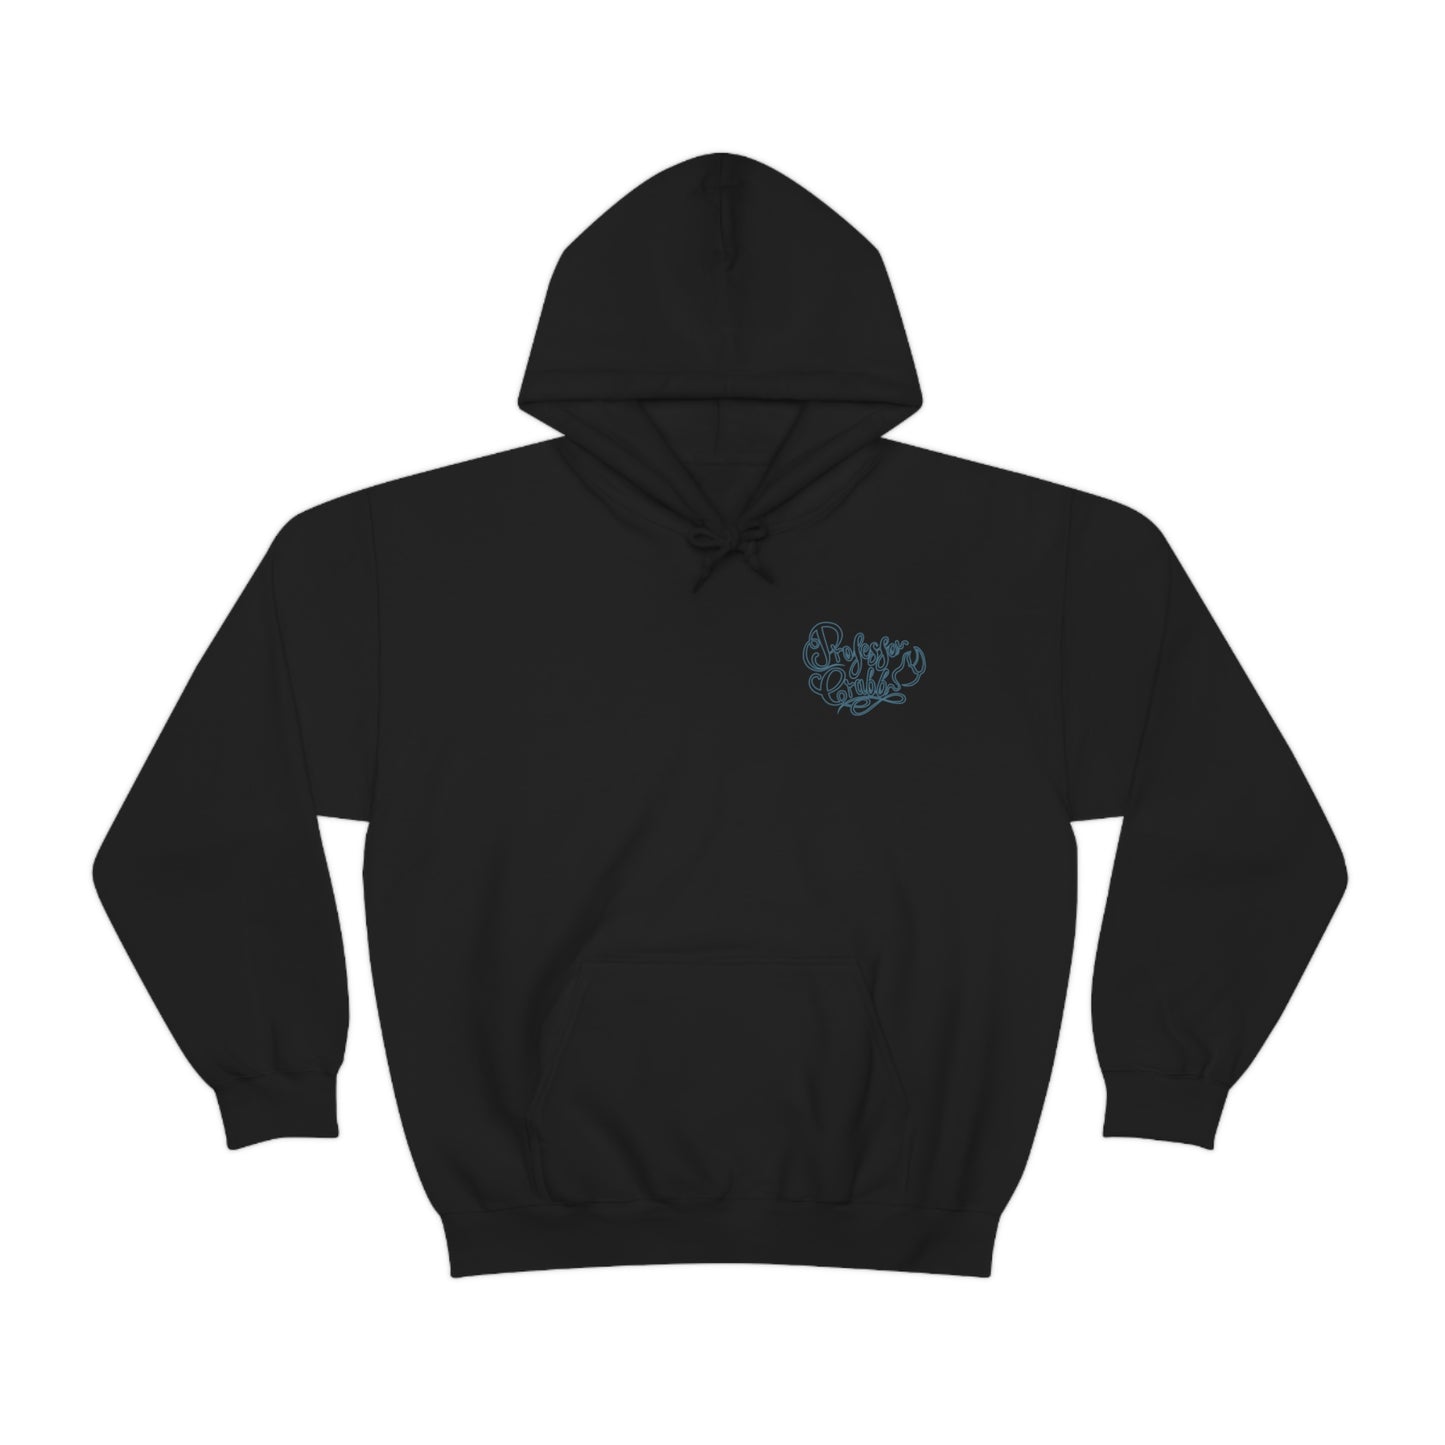 The Crab Earth Society - Unisex Heavy Blend™ Hooded Sweatshirt